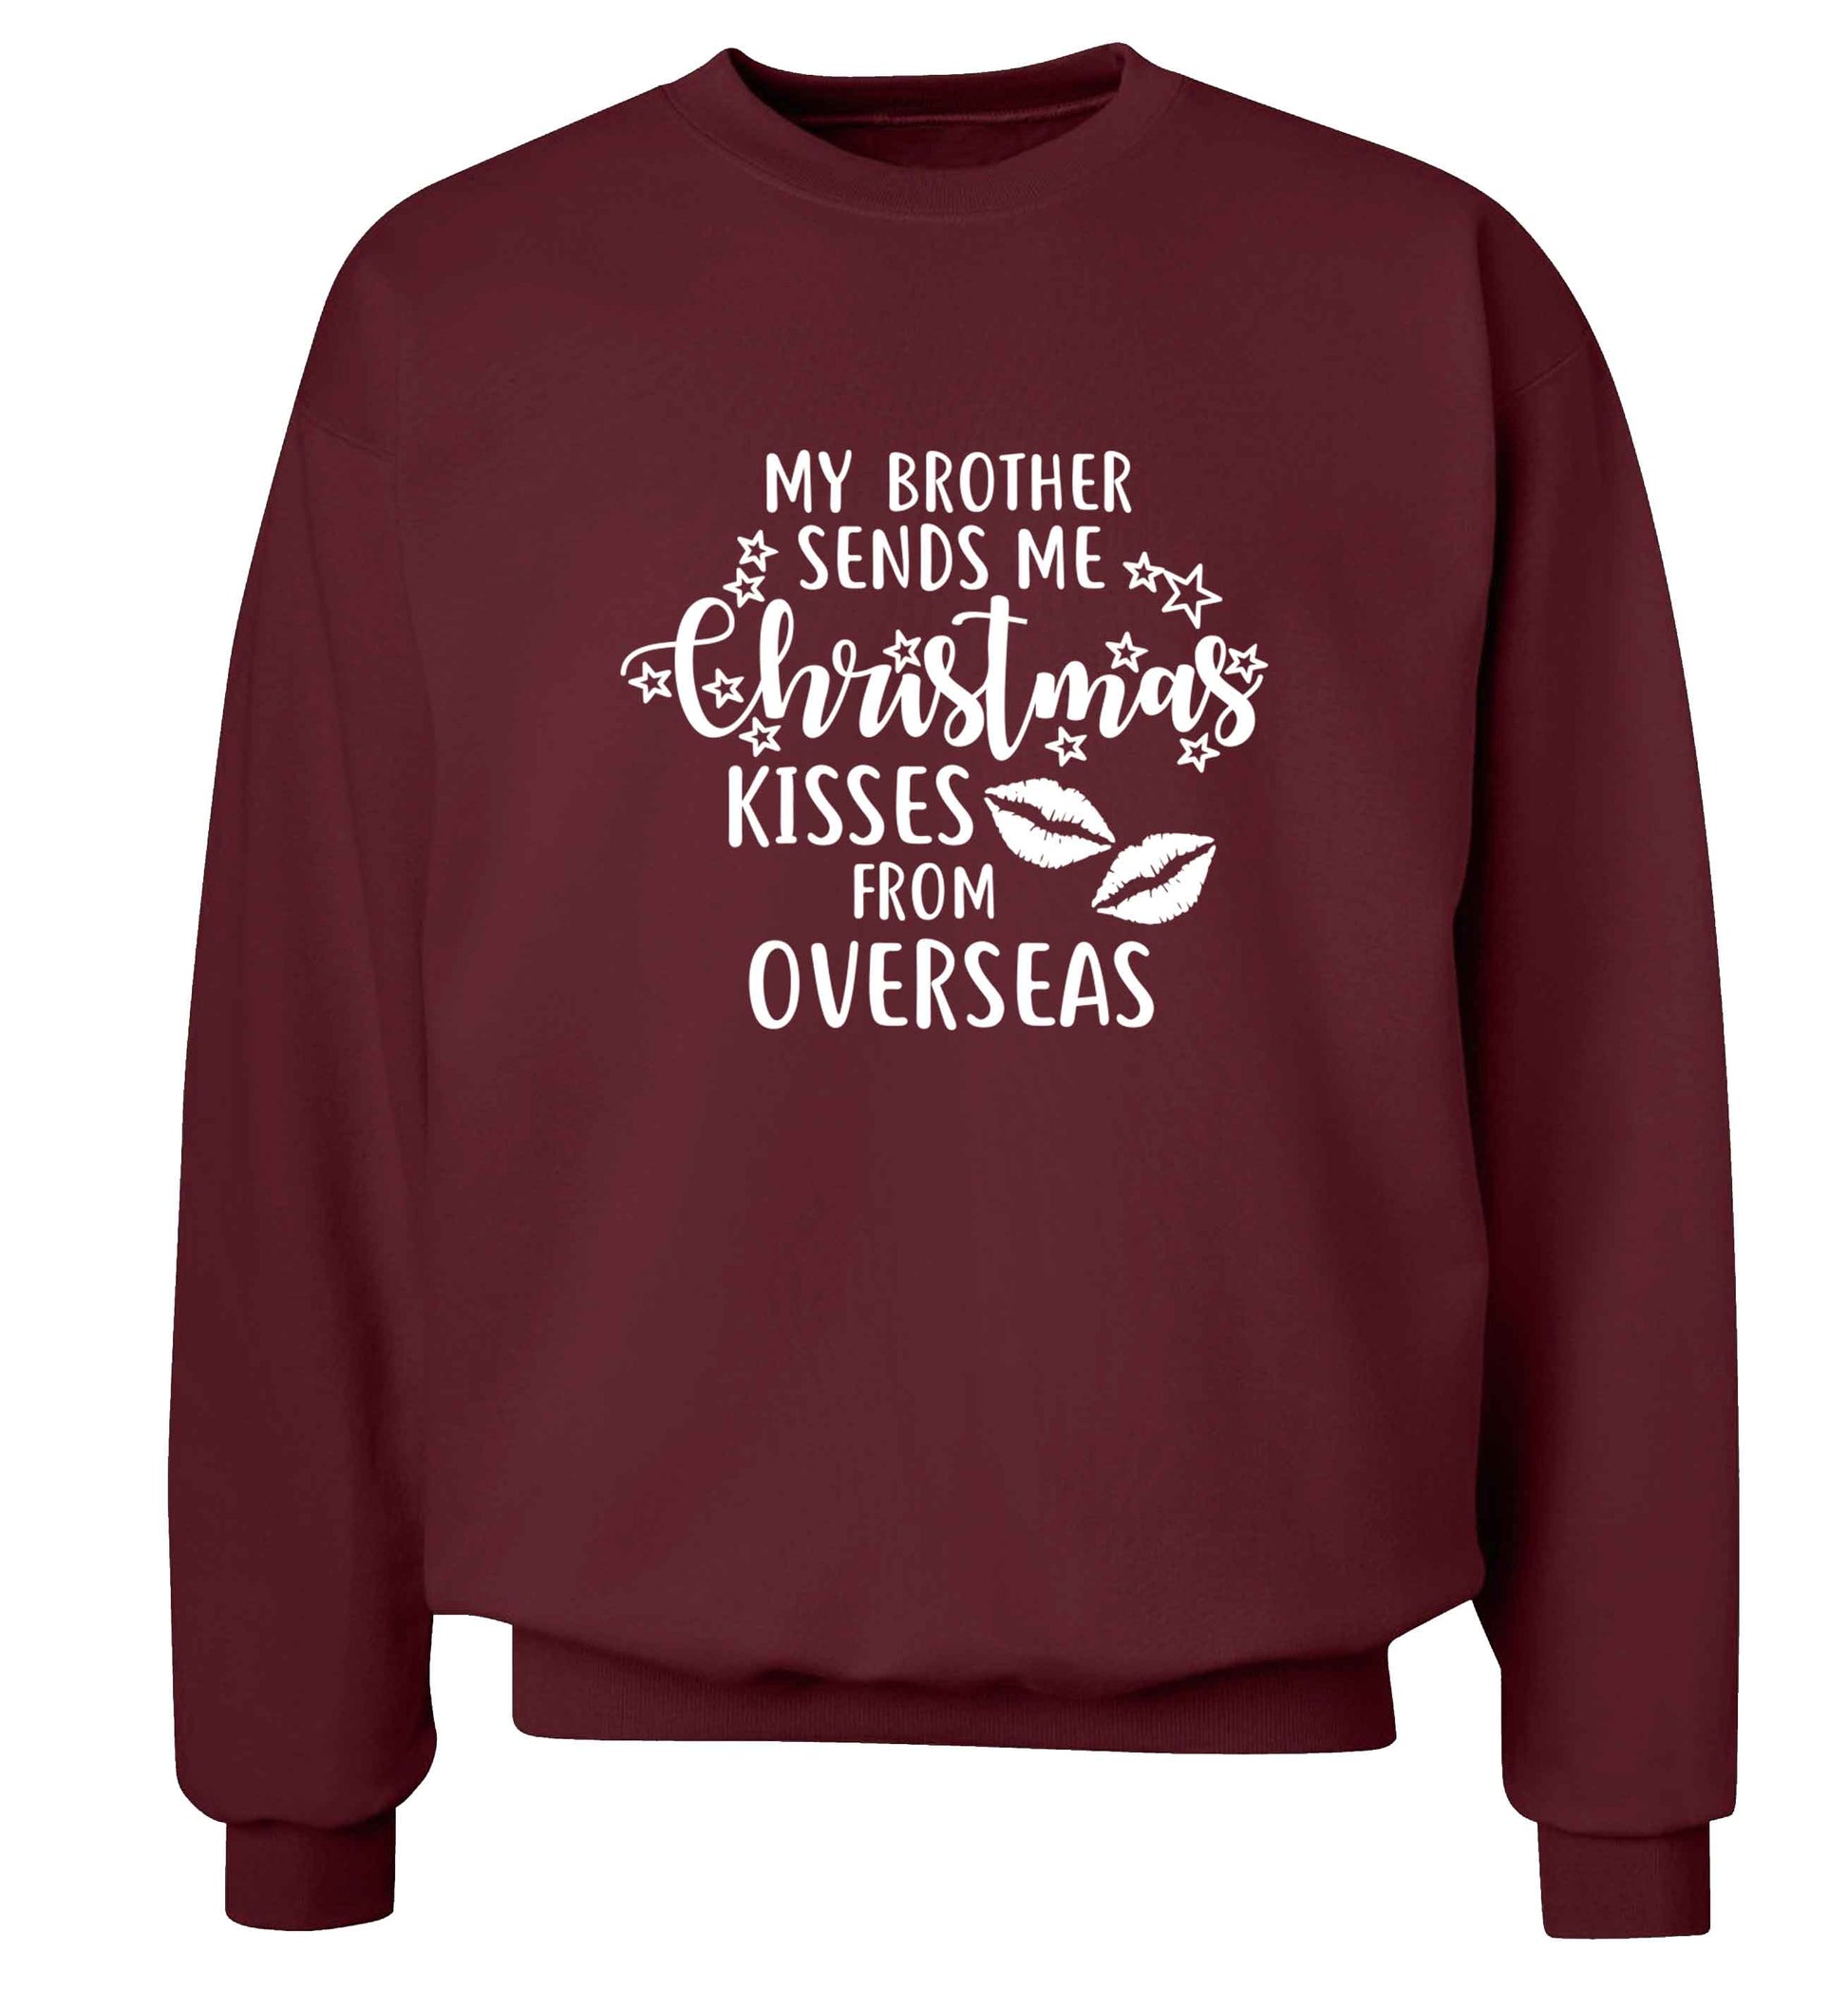 Brother Christmas Kisses Overseas adult's unisex maroon sweater 2XL